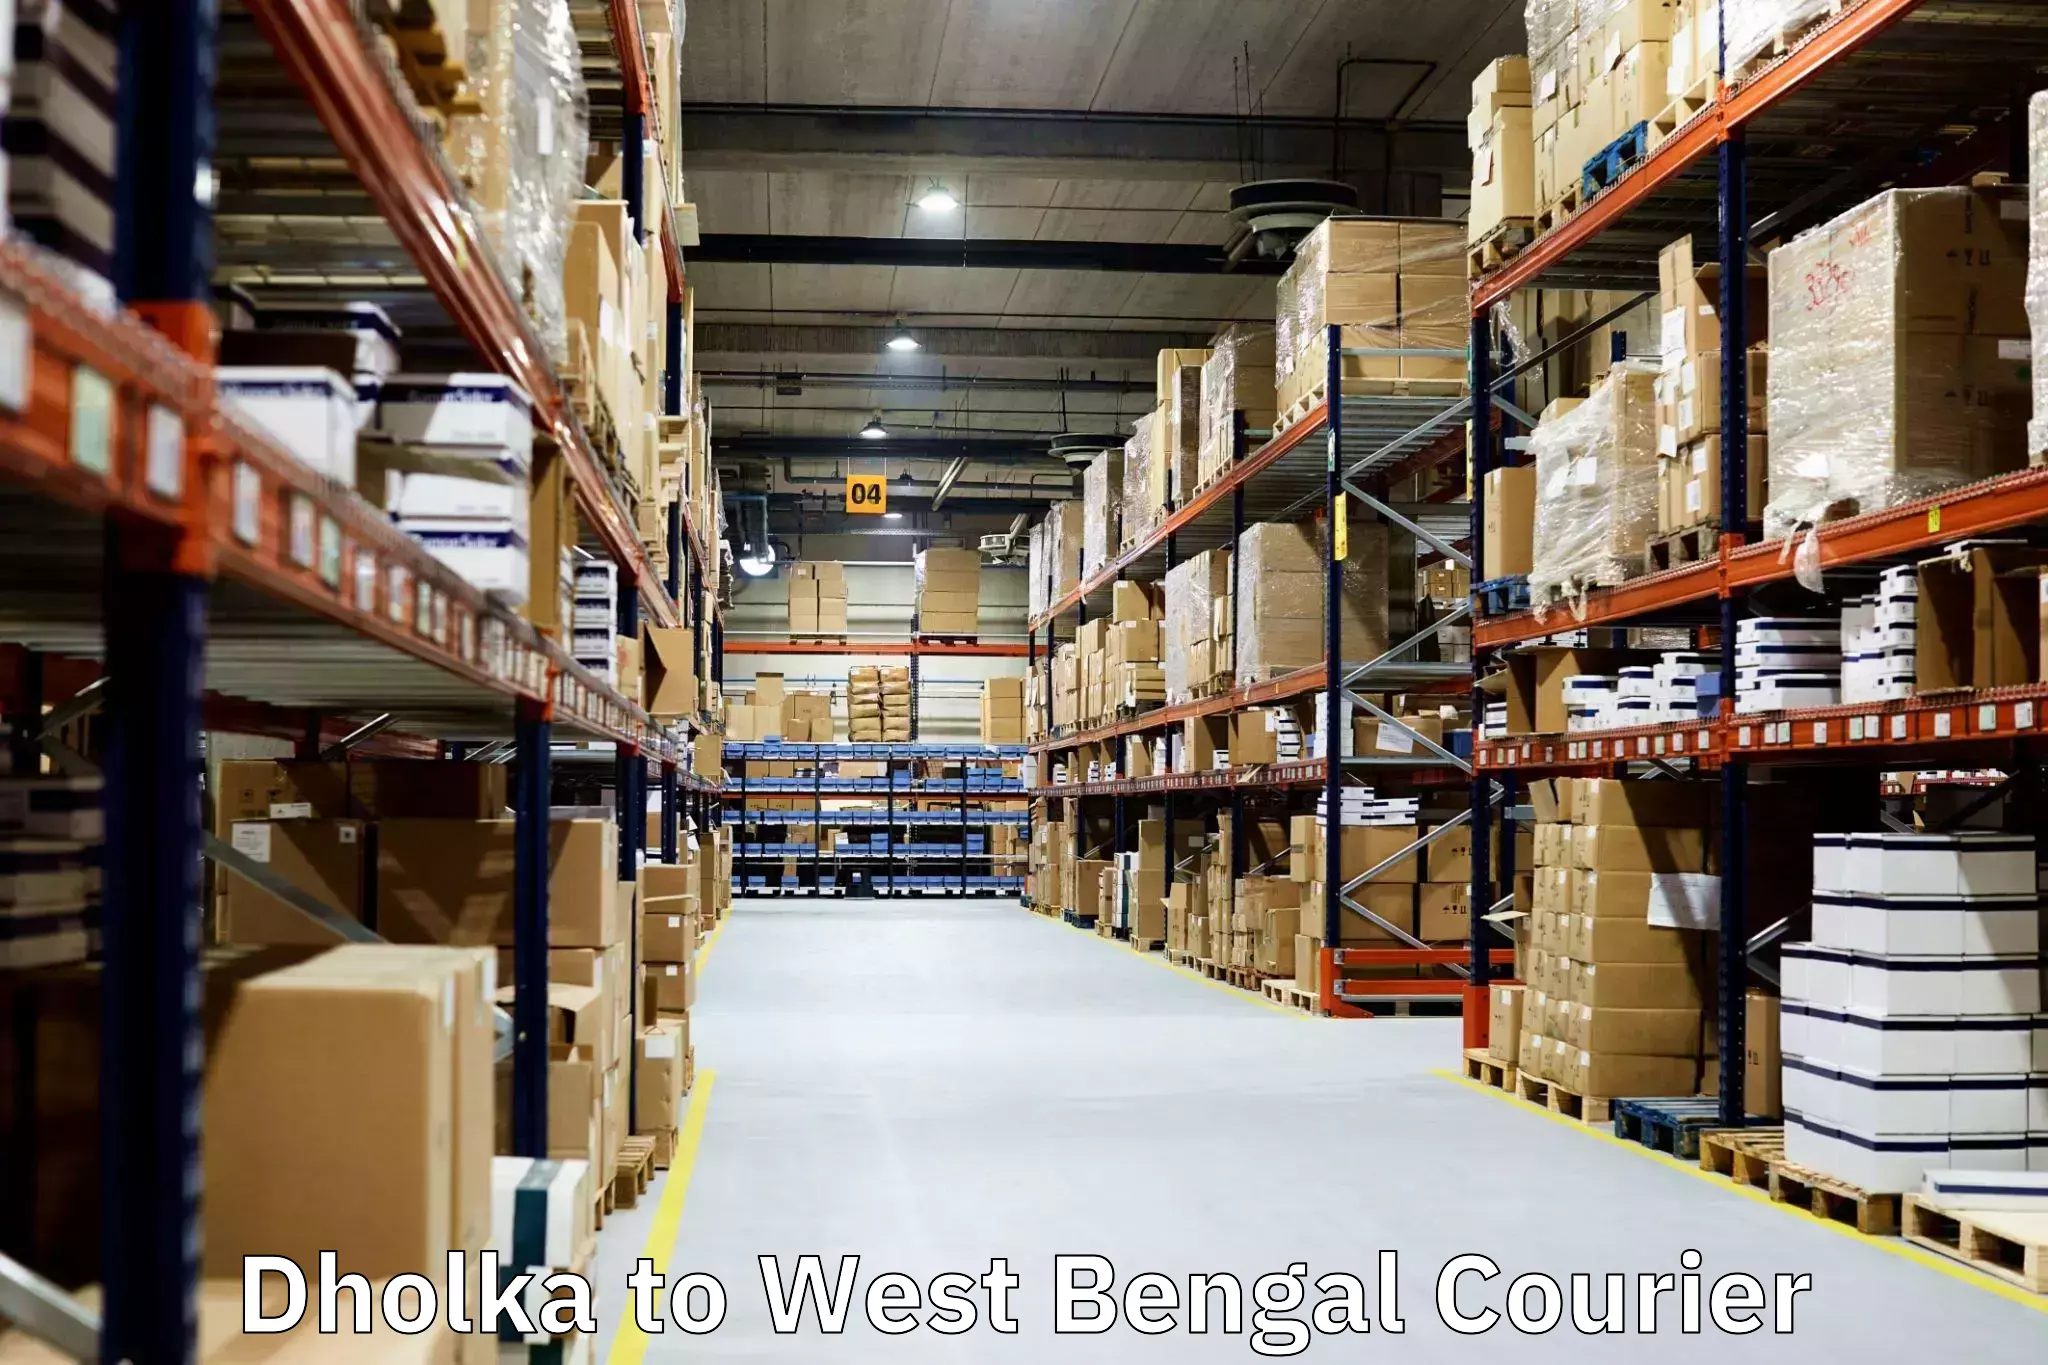 Moving and storage services Dholka to Kolkata Port